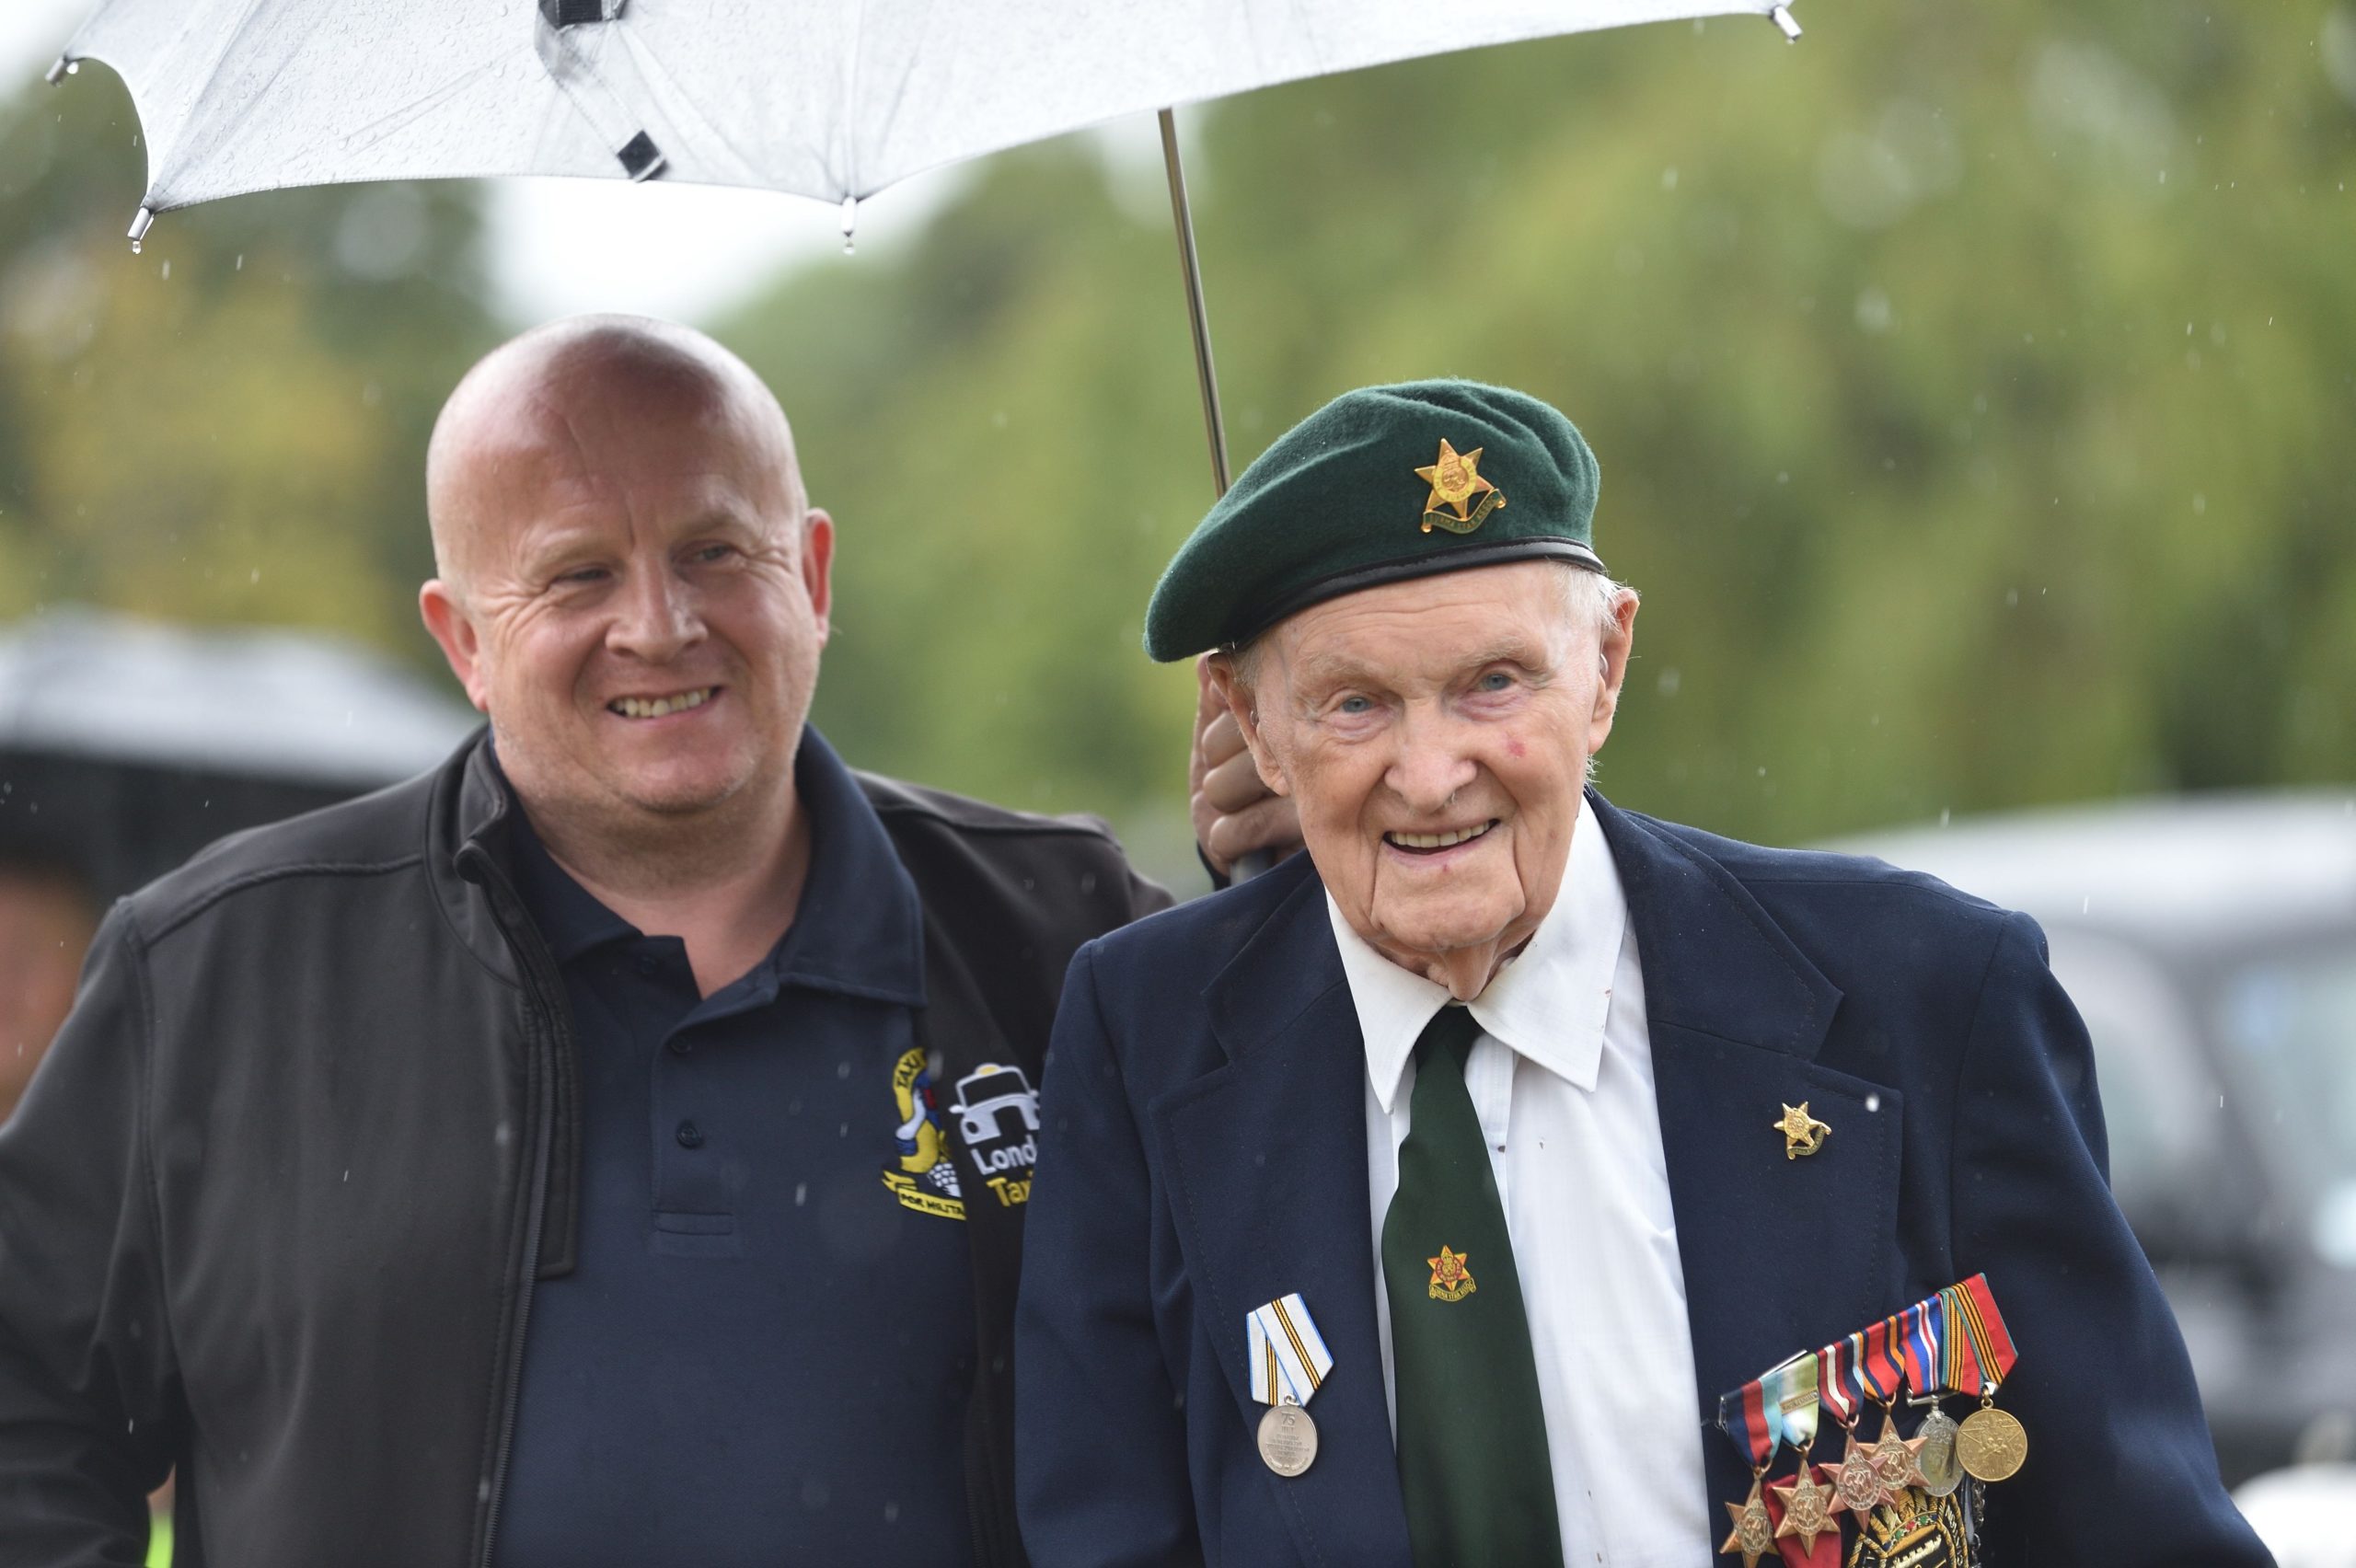 Military veteran and a volunteer holding an umbrella